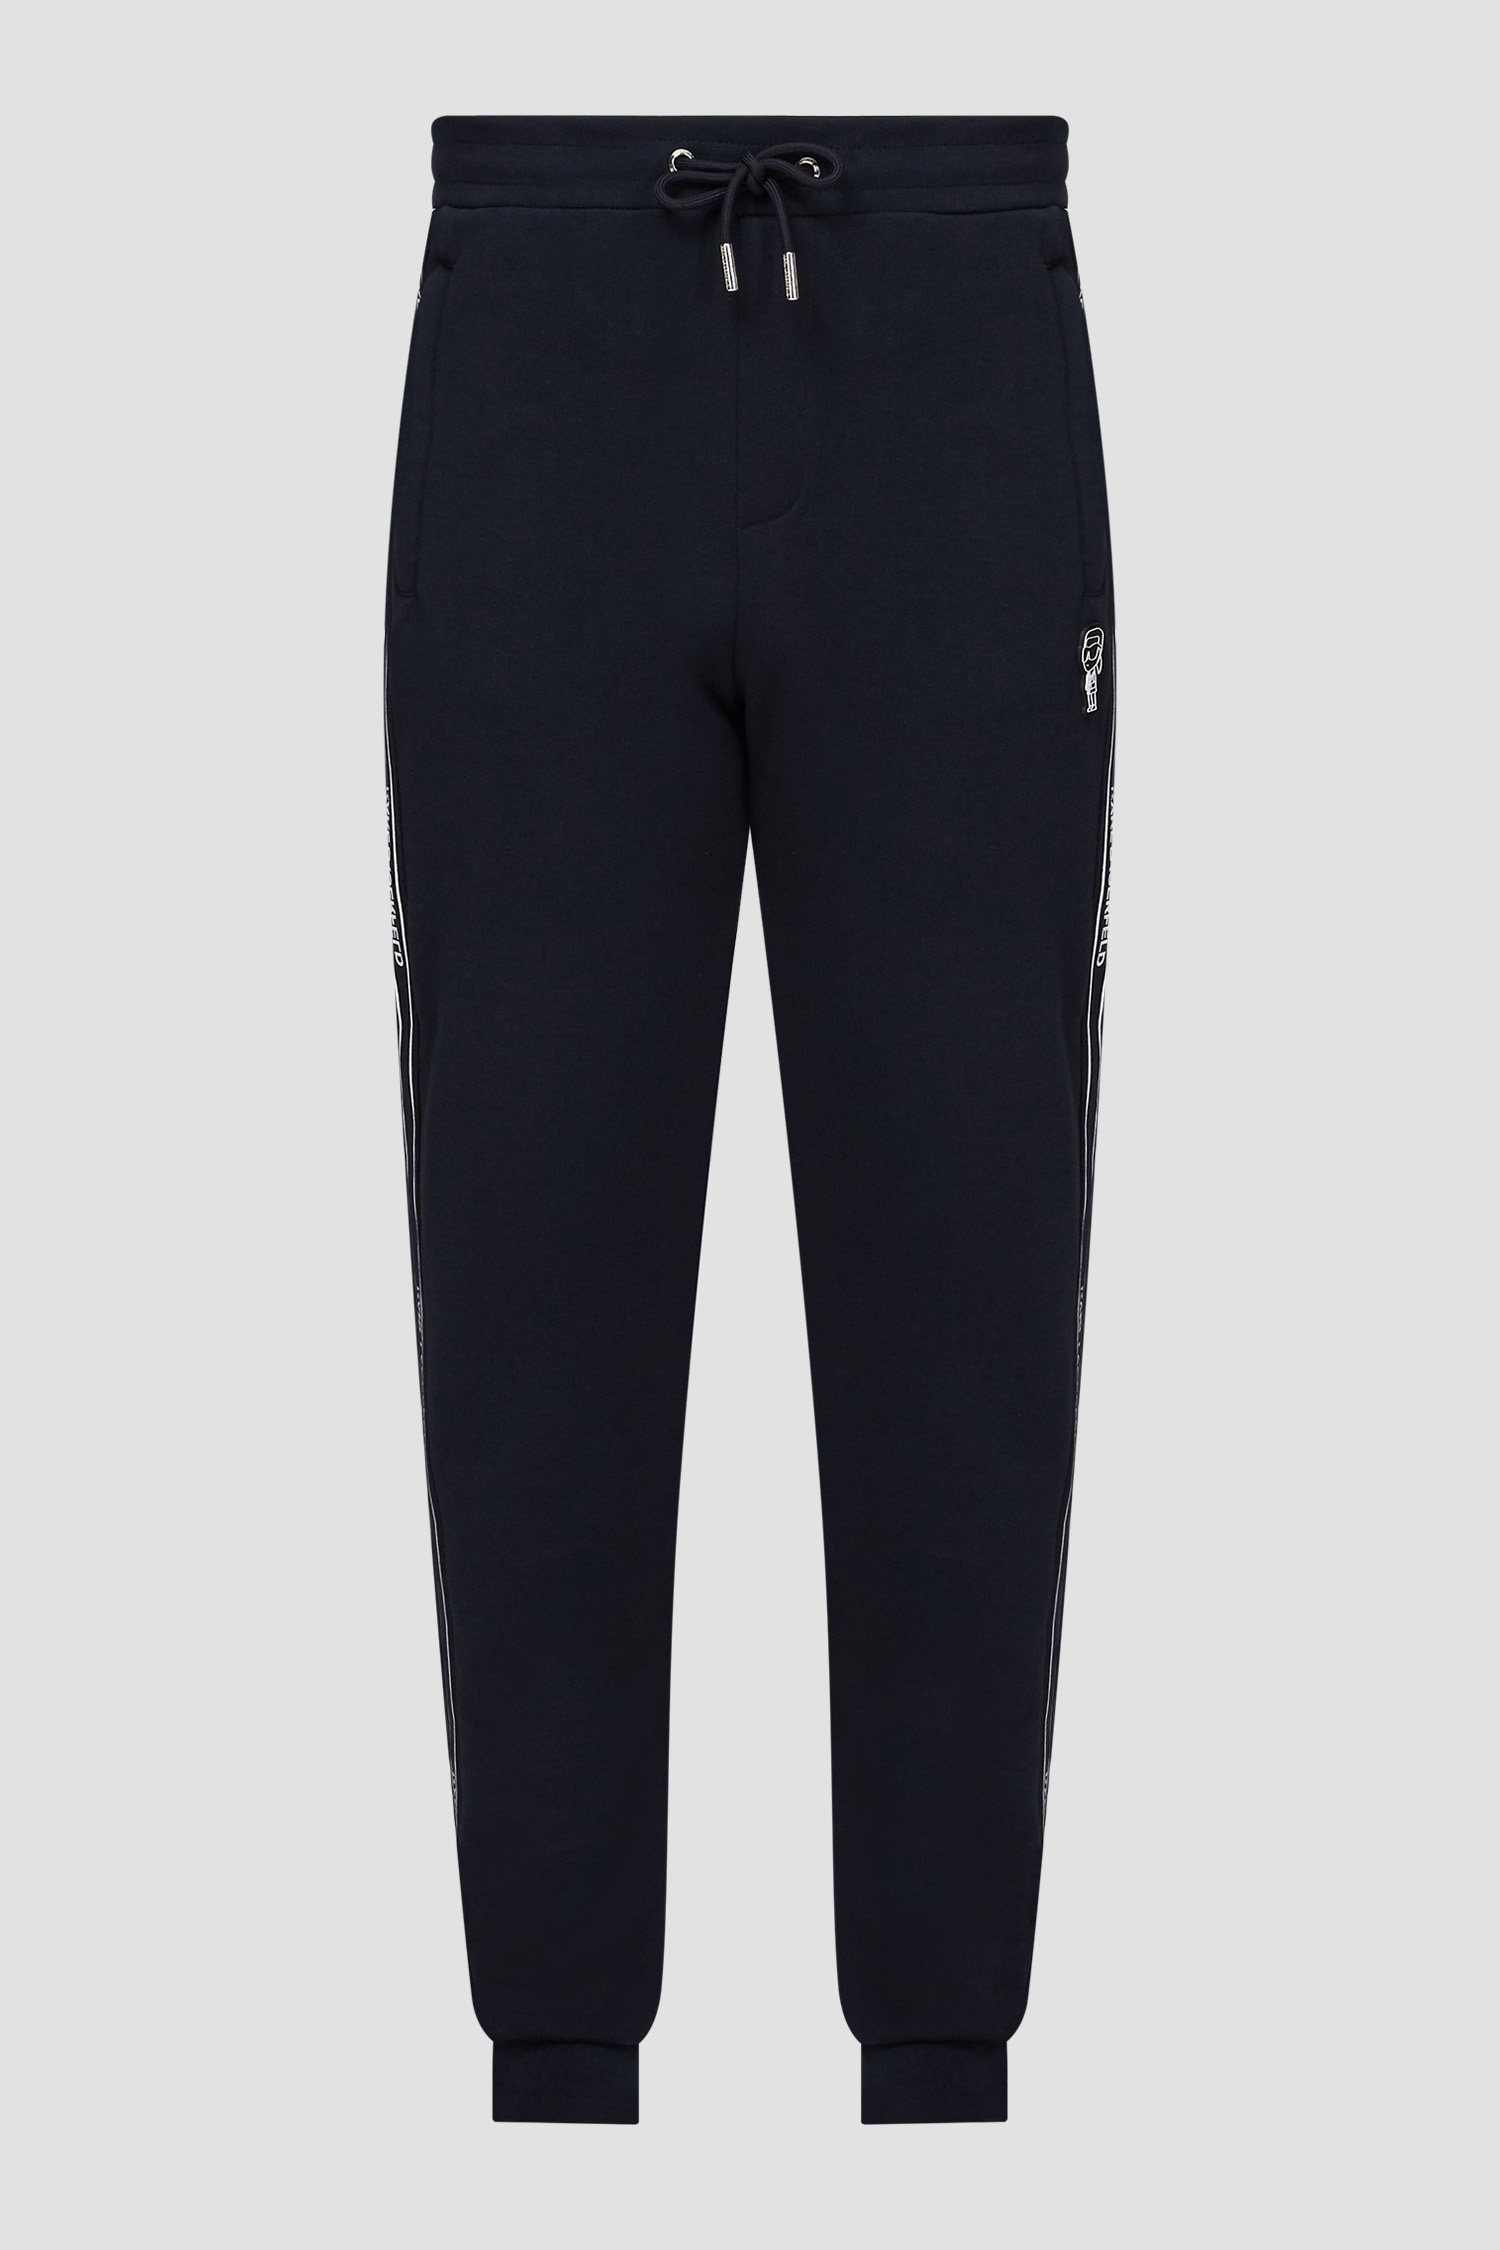 Мужские темно-синие спортивные брюки Karl Lagerfeld 532900.705040;690